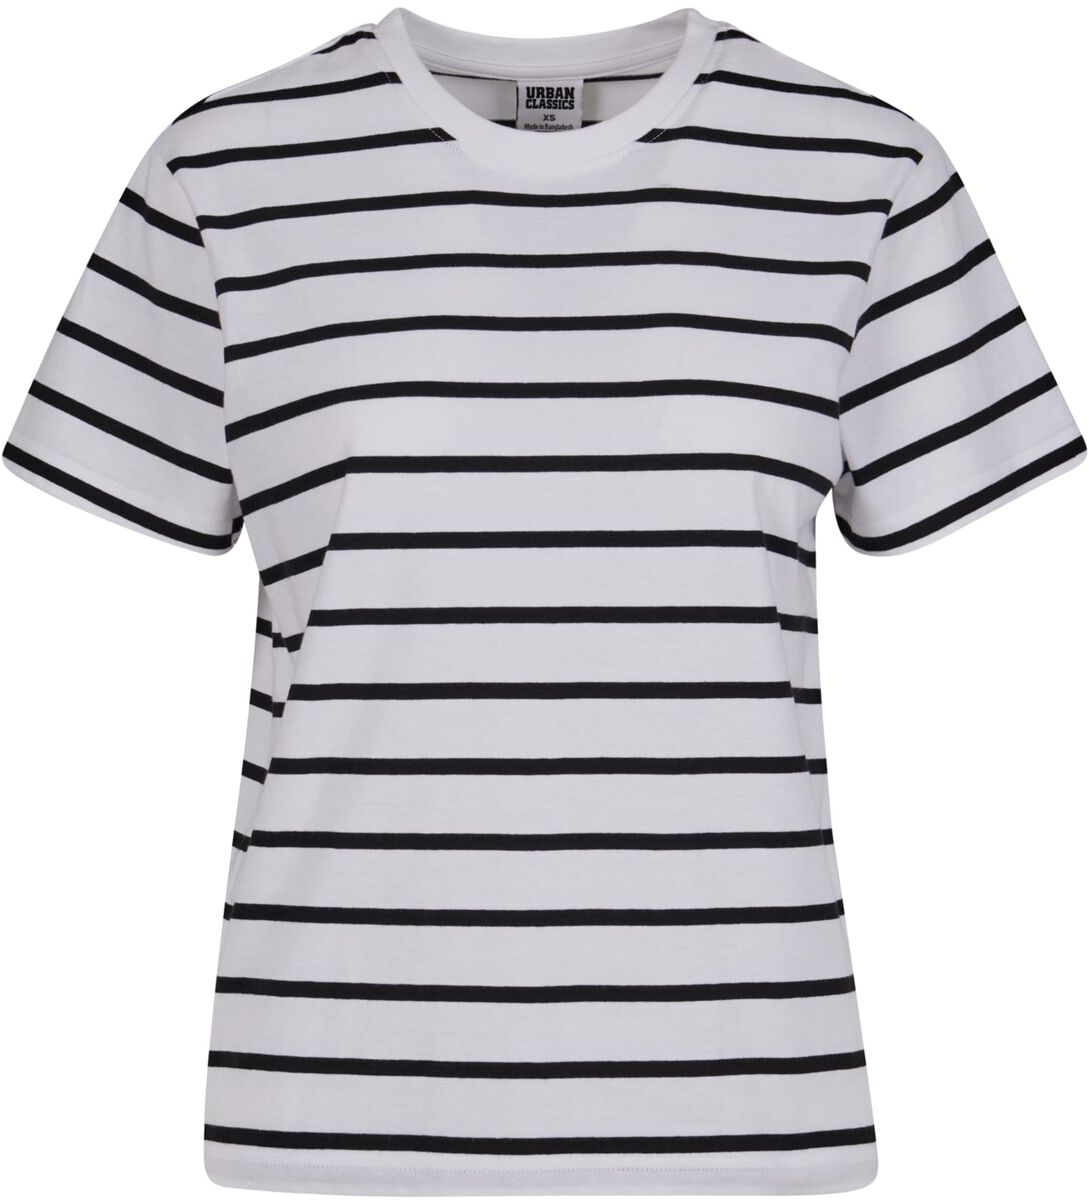 Urban Classics Ladies Striped Boxy Tee T-Shirt schwarz weiß in S